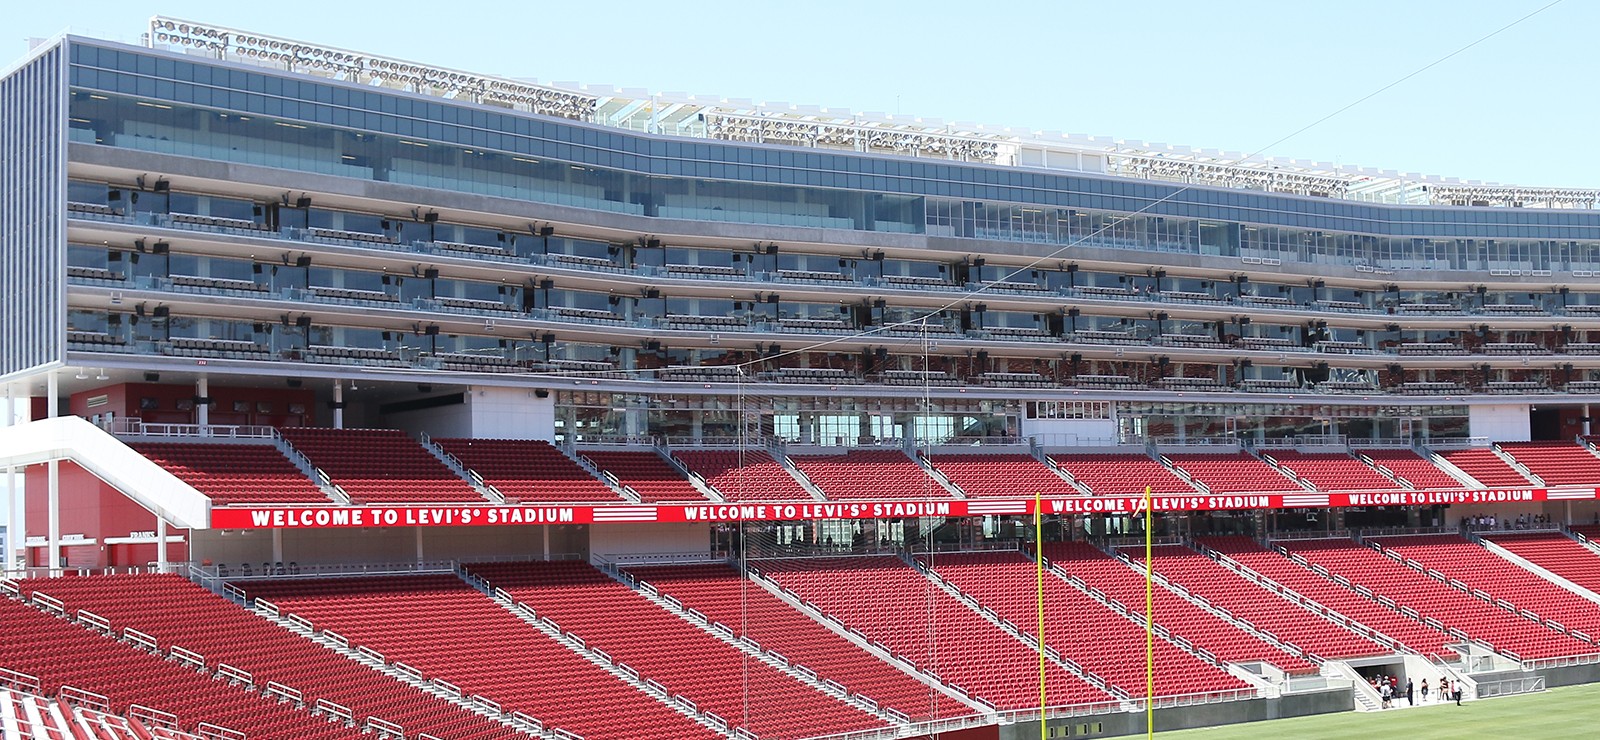 levi's® stadium configuration built for 49ers offensive, defensive